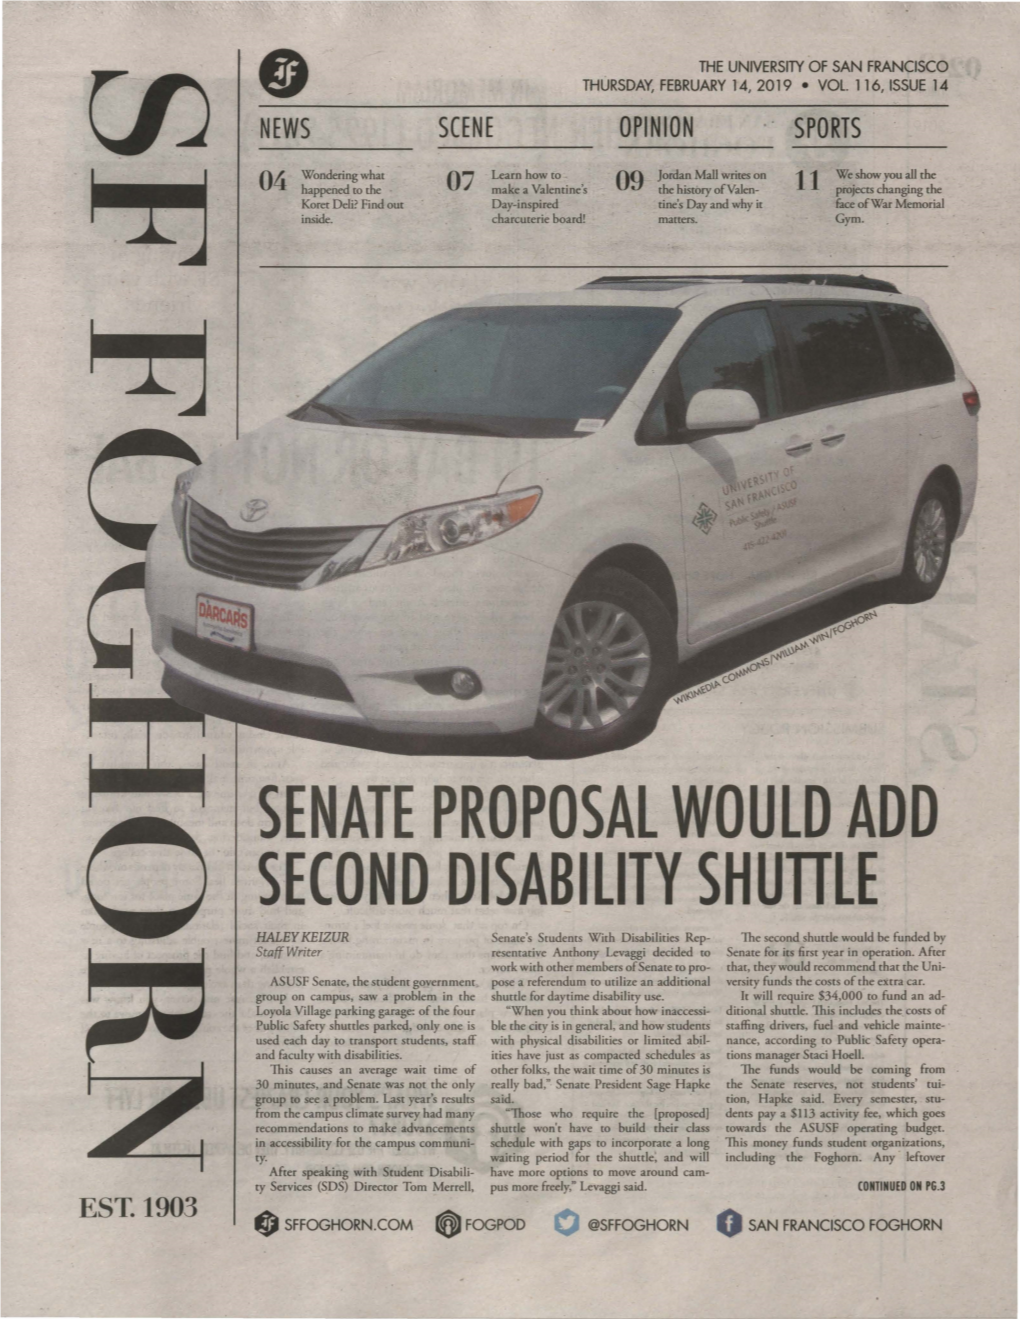 Senate Proposal Would Add Second Disability Shuttle